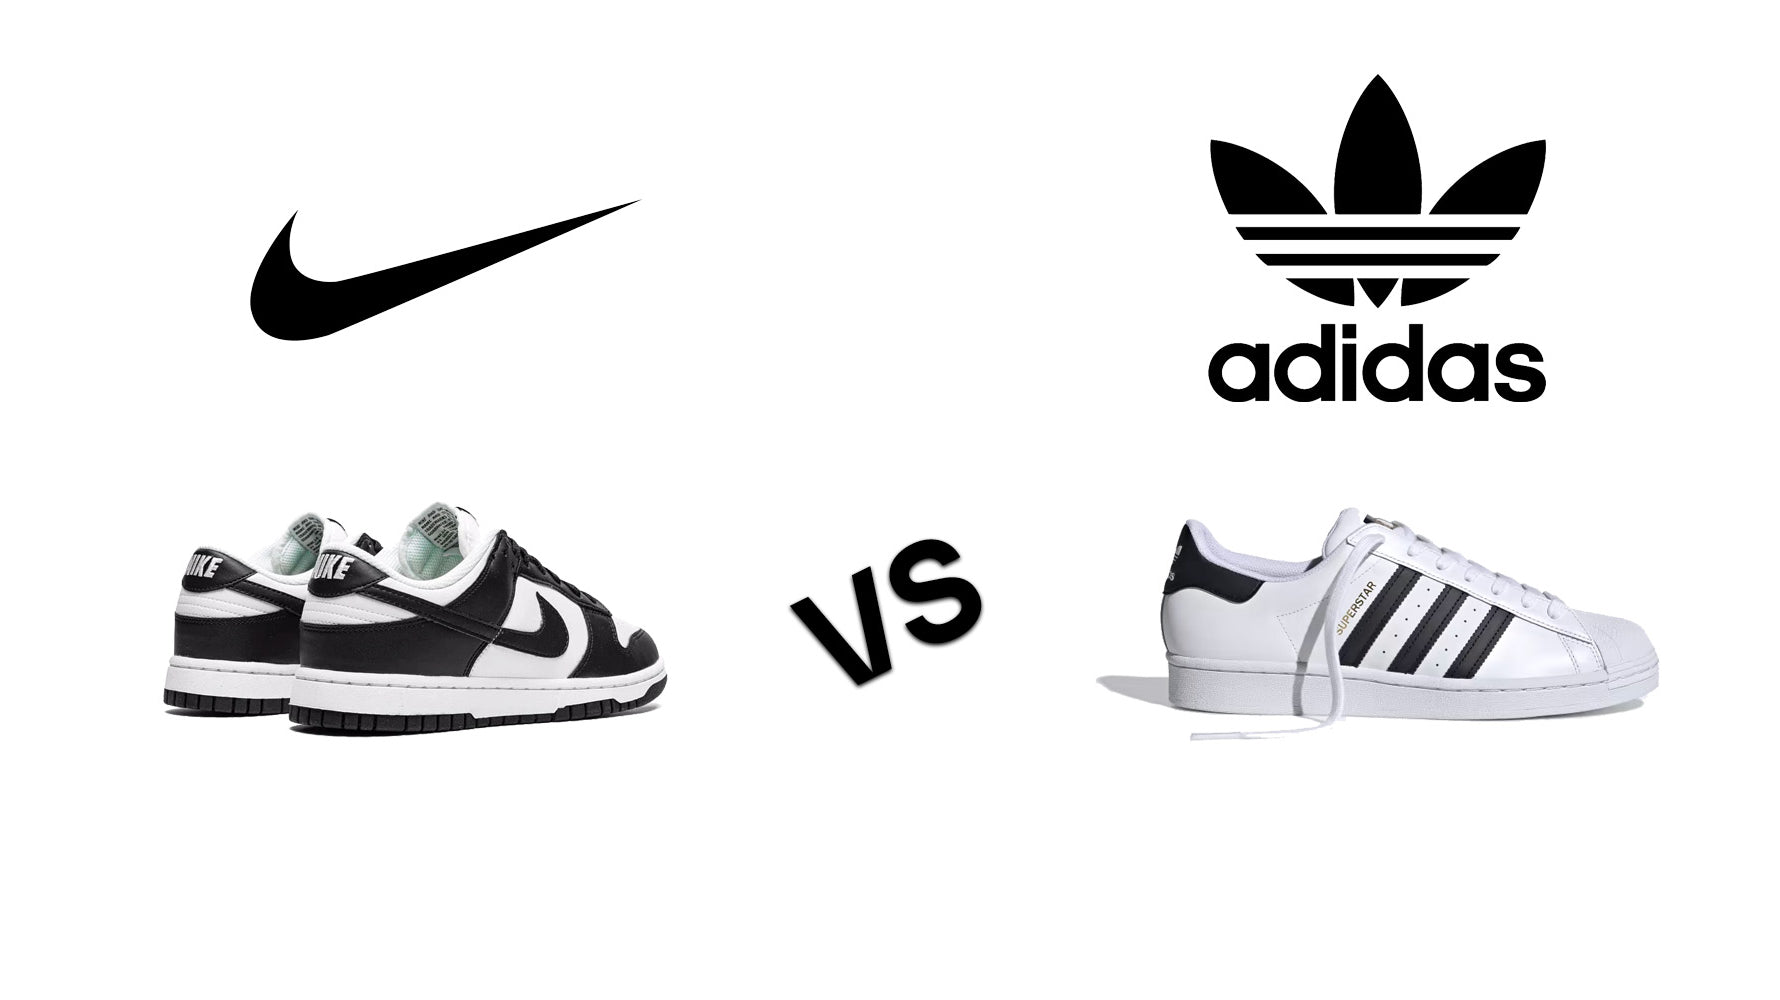 És team Adidas ou team Nike?